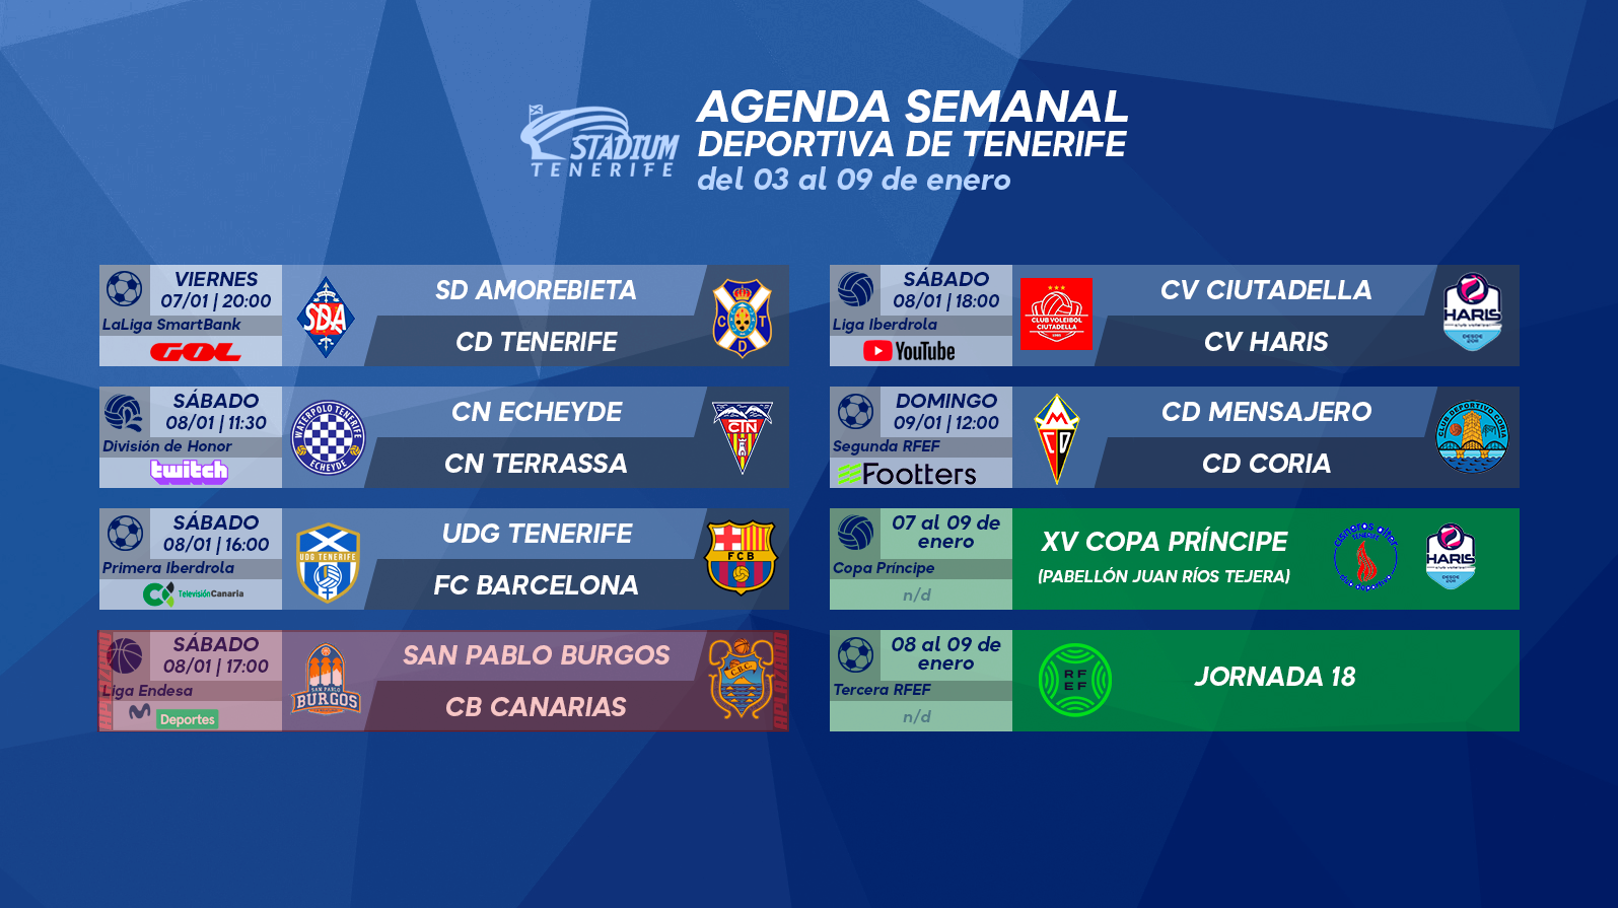 Agenda Semanal Deportiva de Tenerife (3 al 9 de enero)